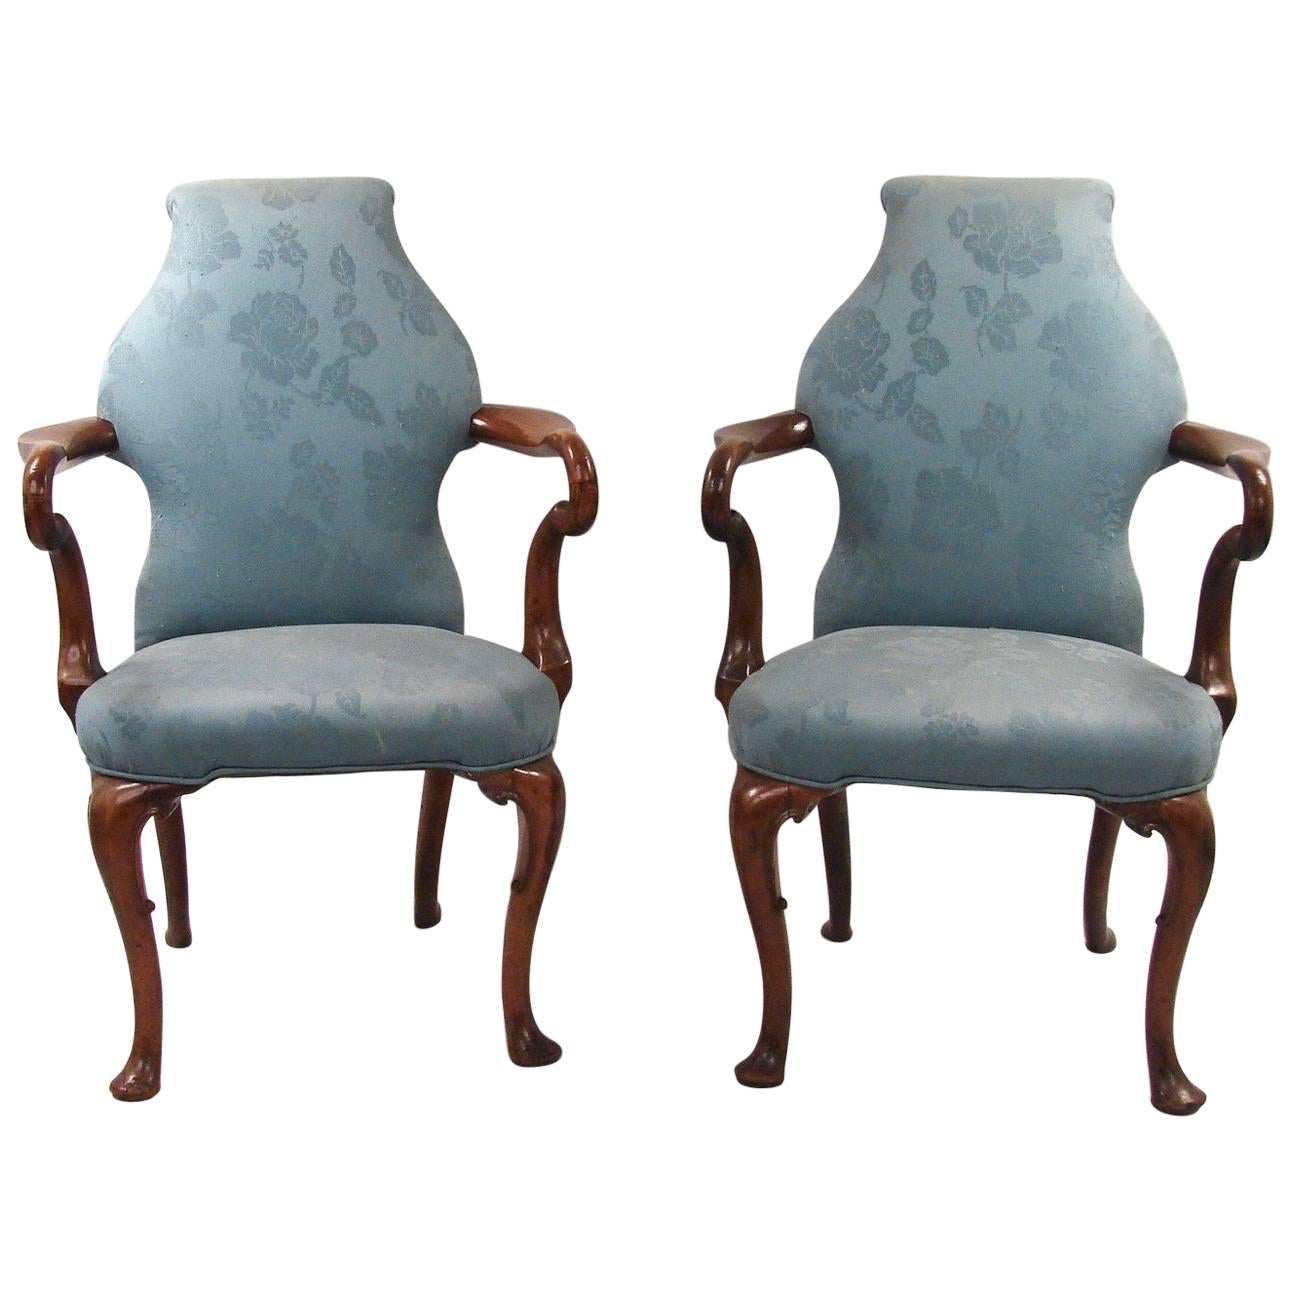 English George II Style Walnut Upholstered Armchairs